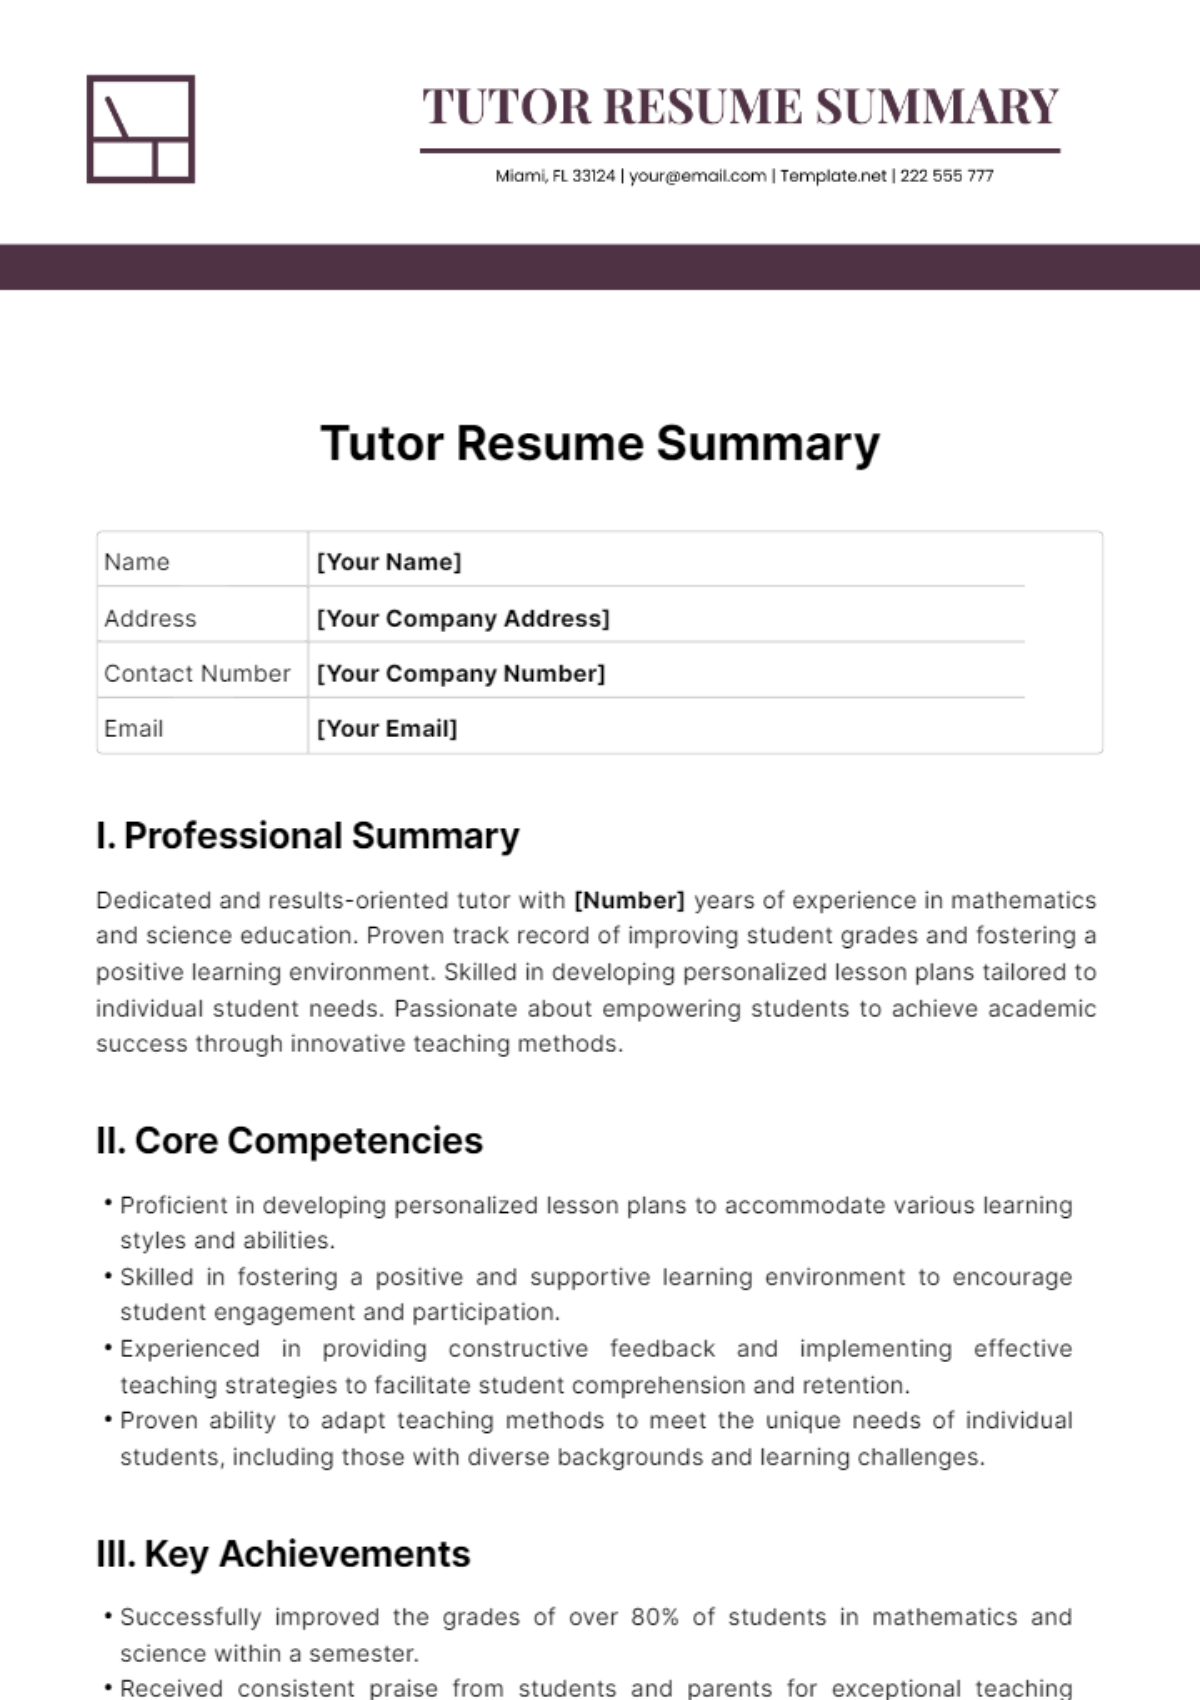 Free Tutor Resume Summary Template